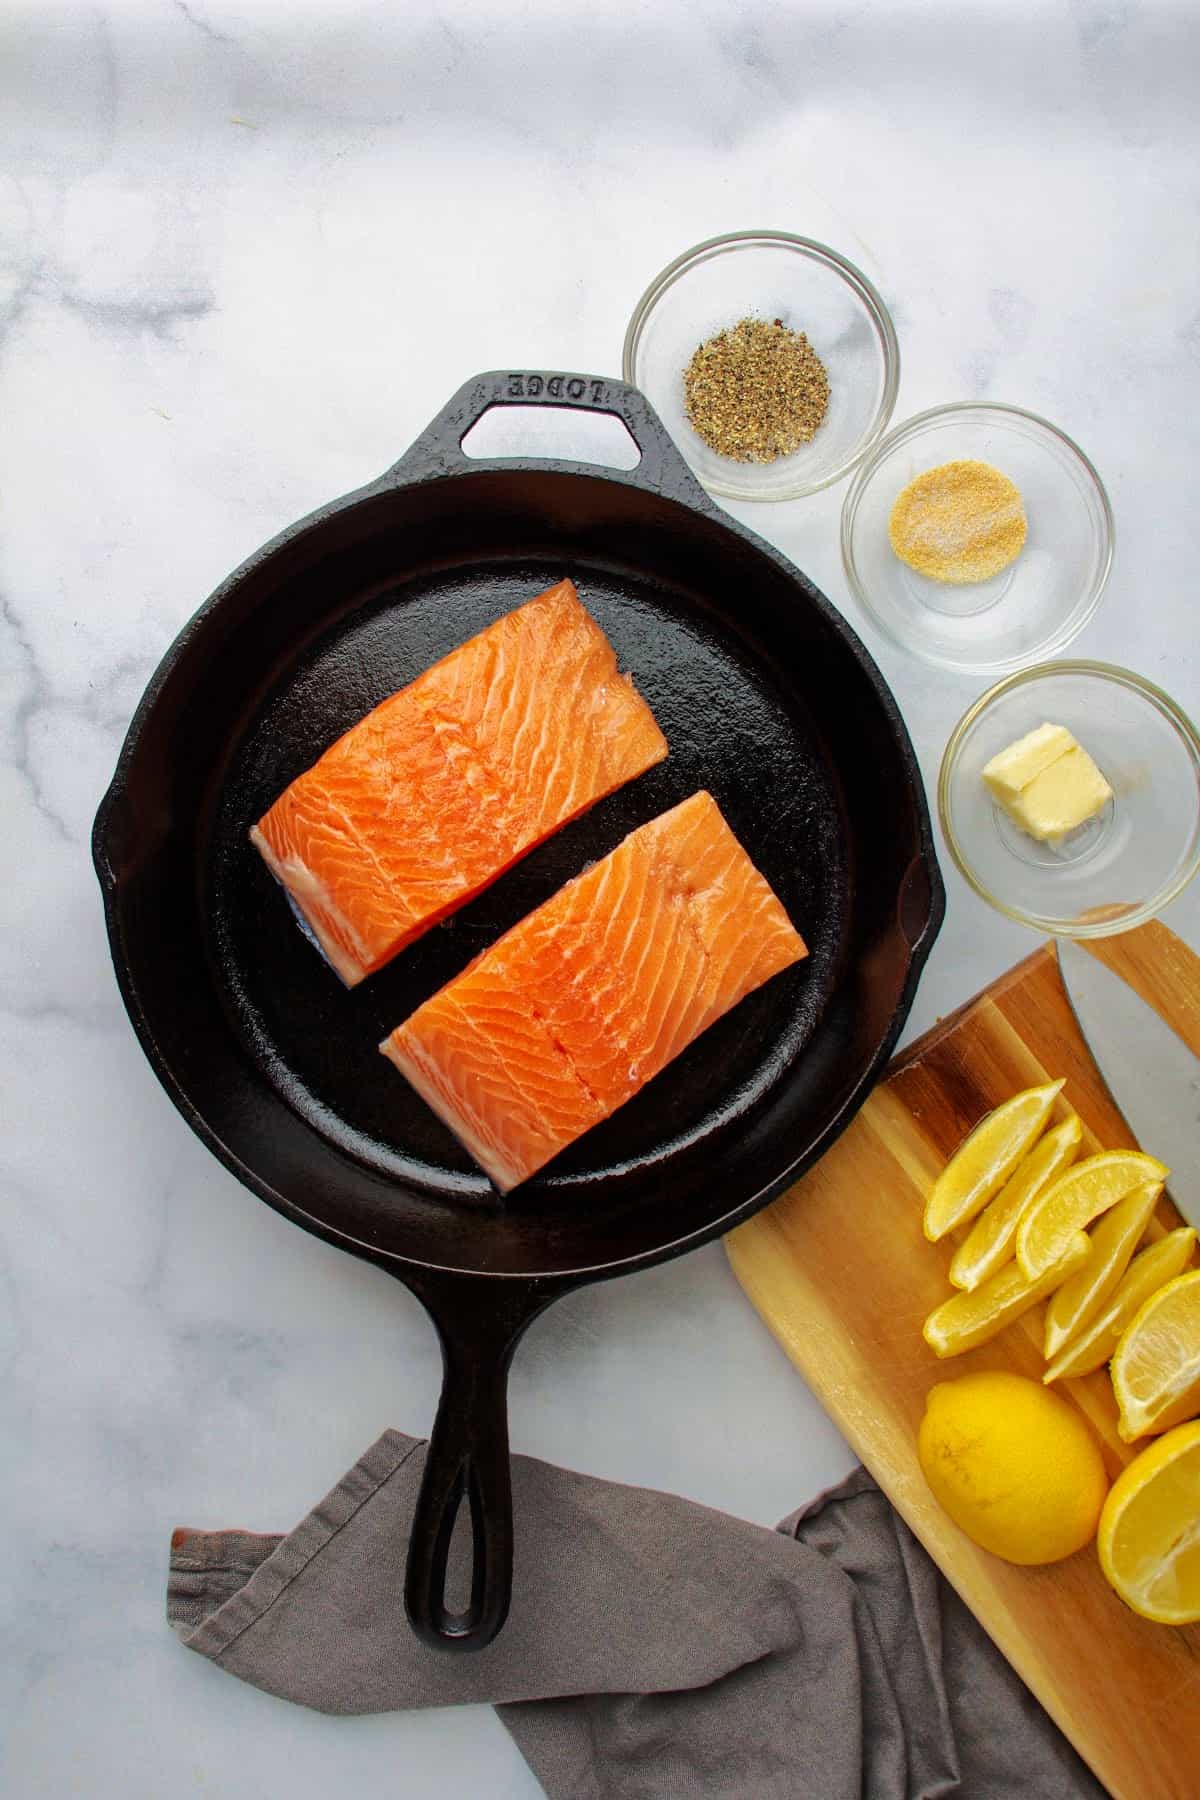 ingredients to make crispy skin salmon recipe in a separate bowls: two salmon filets, black pepper, garlic salt, butter, and lemon slices